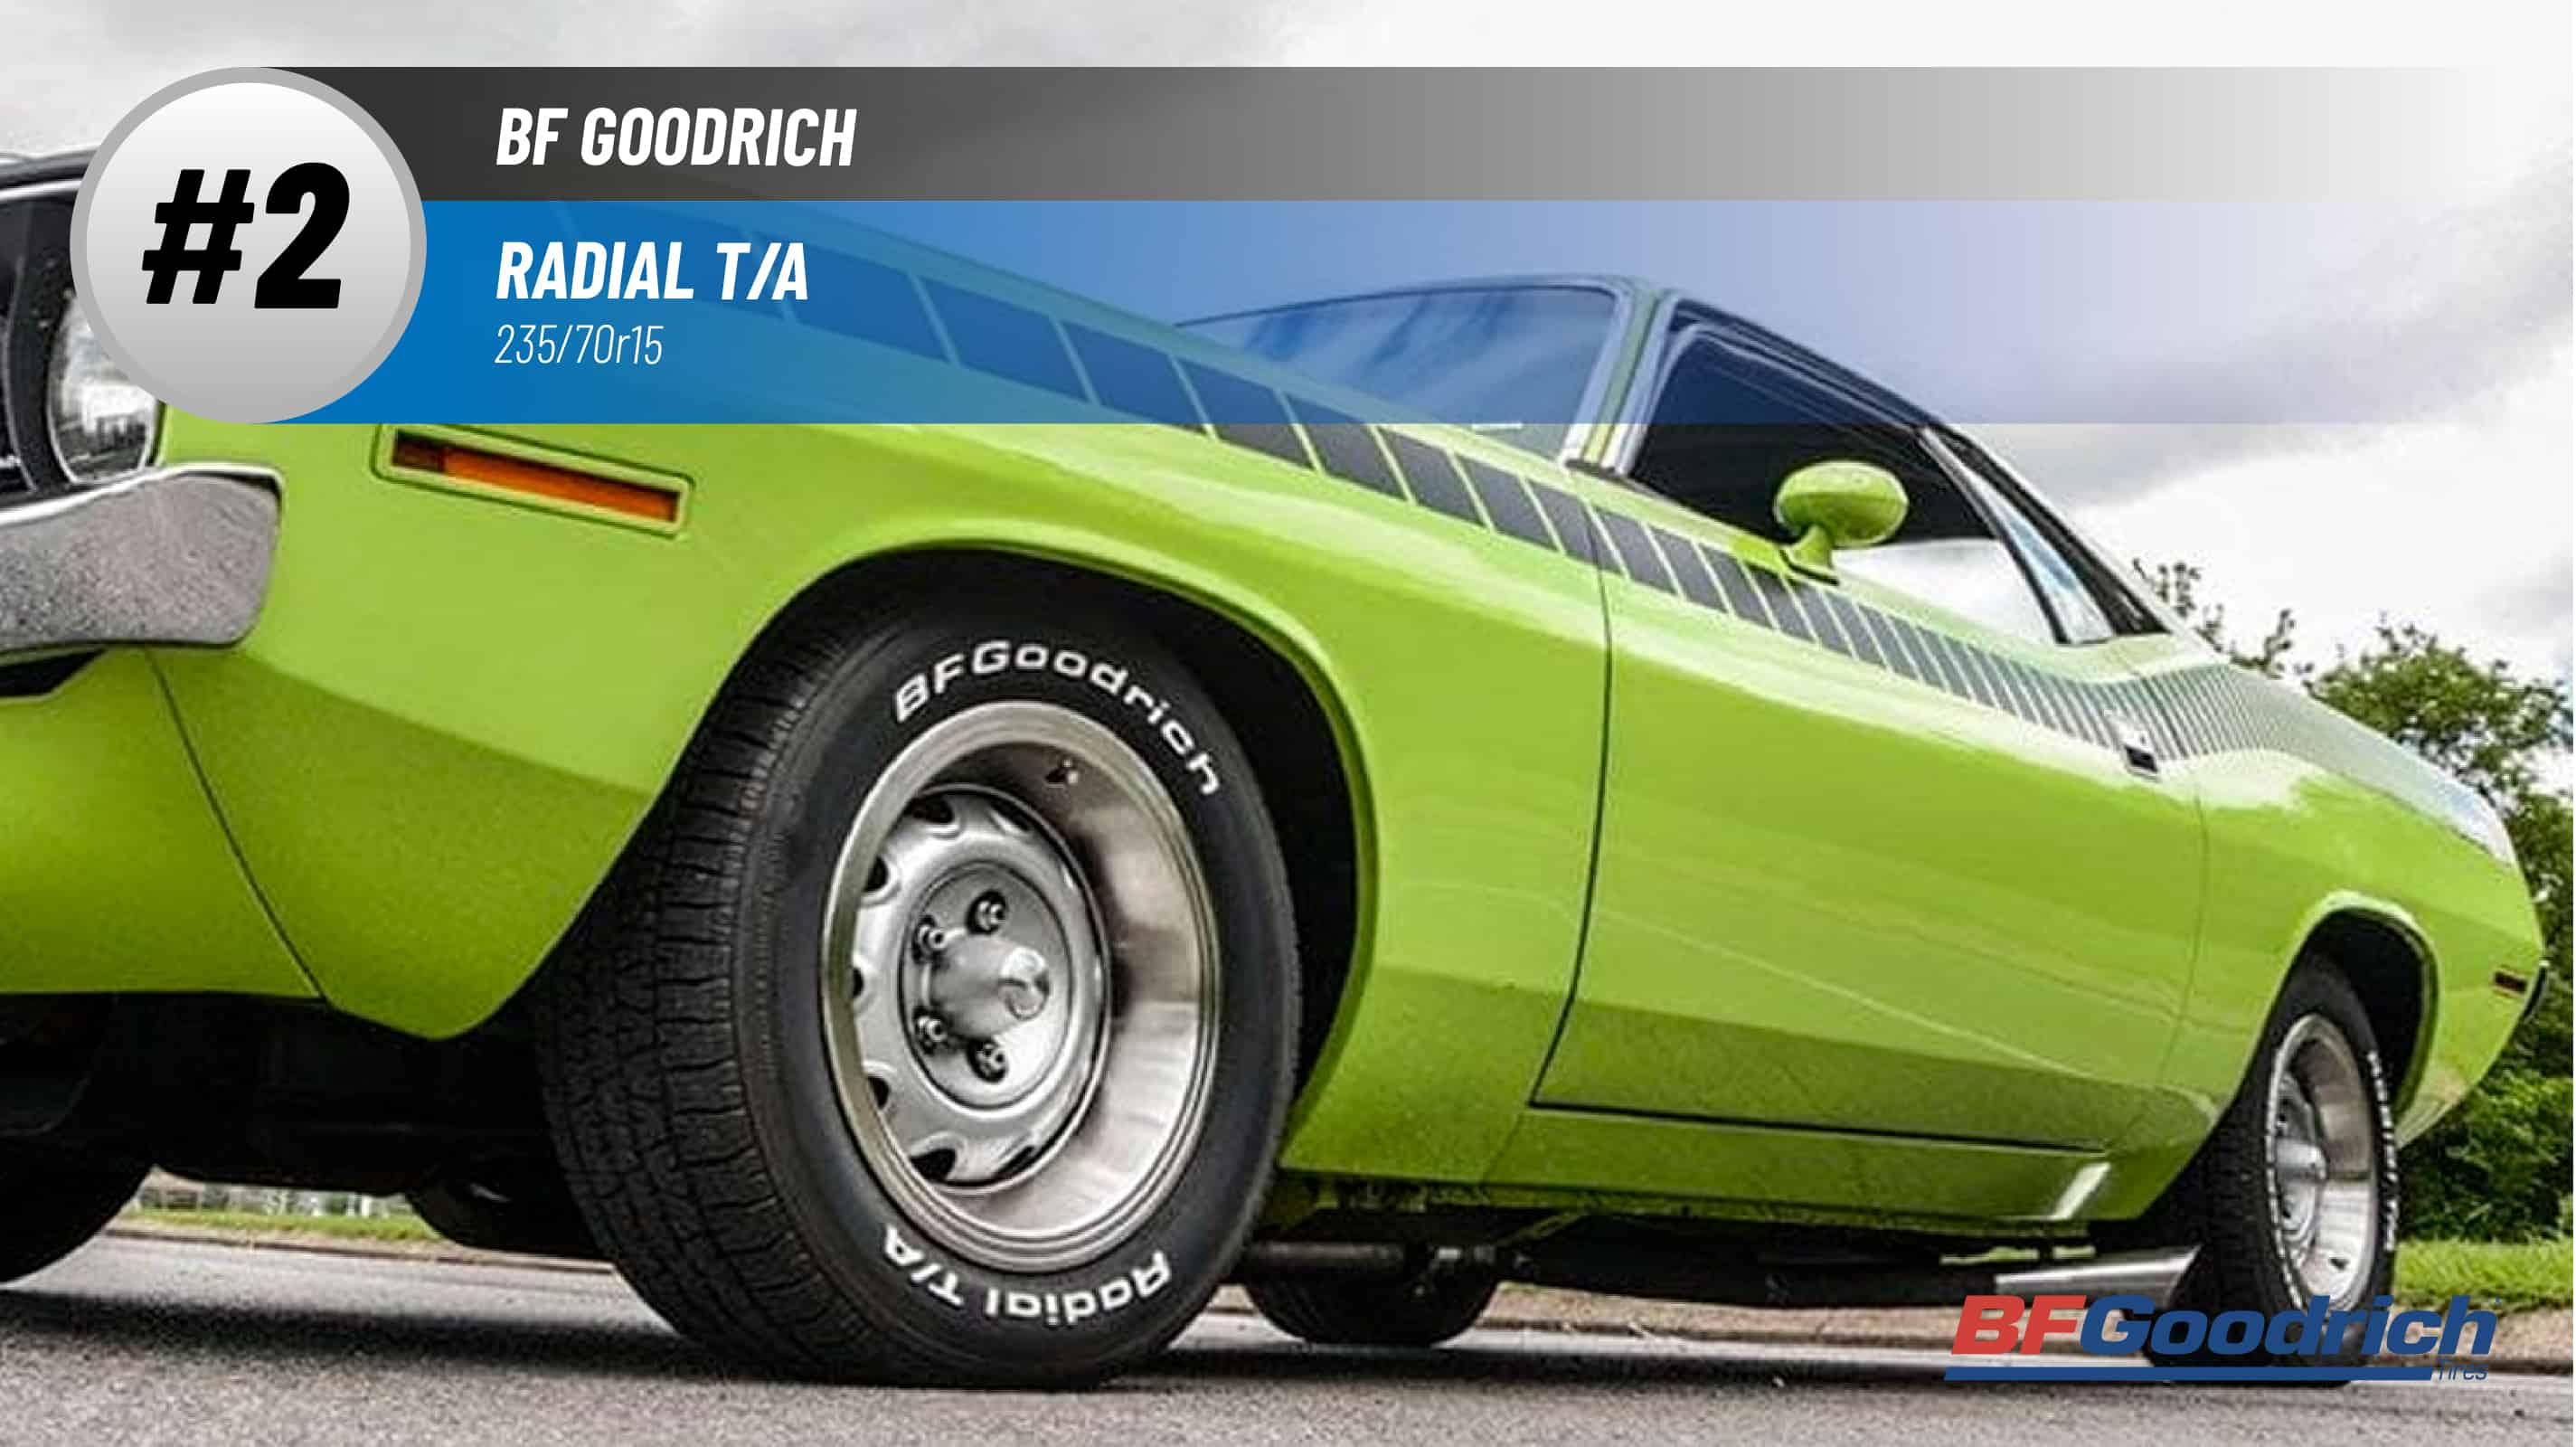 Top #2 Best 235/70r15: BF Goodrich Radial T/A